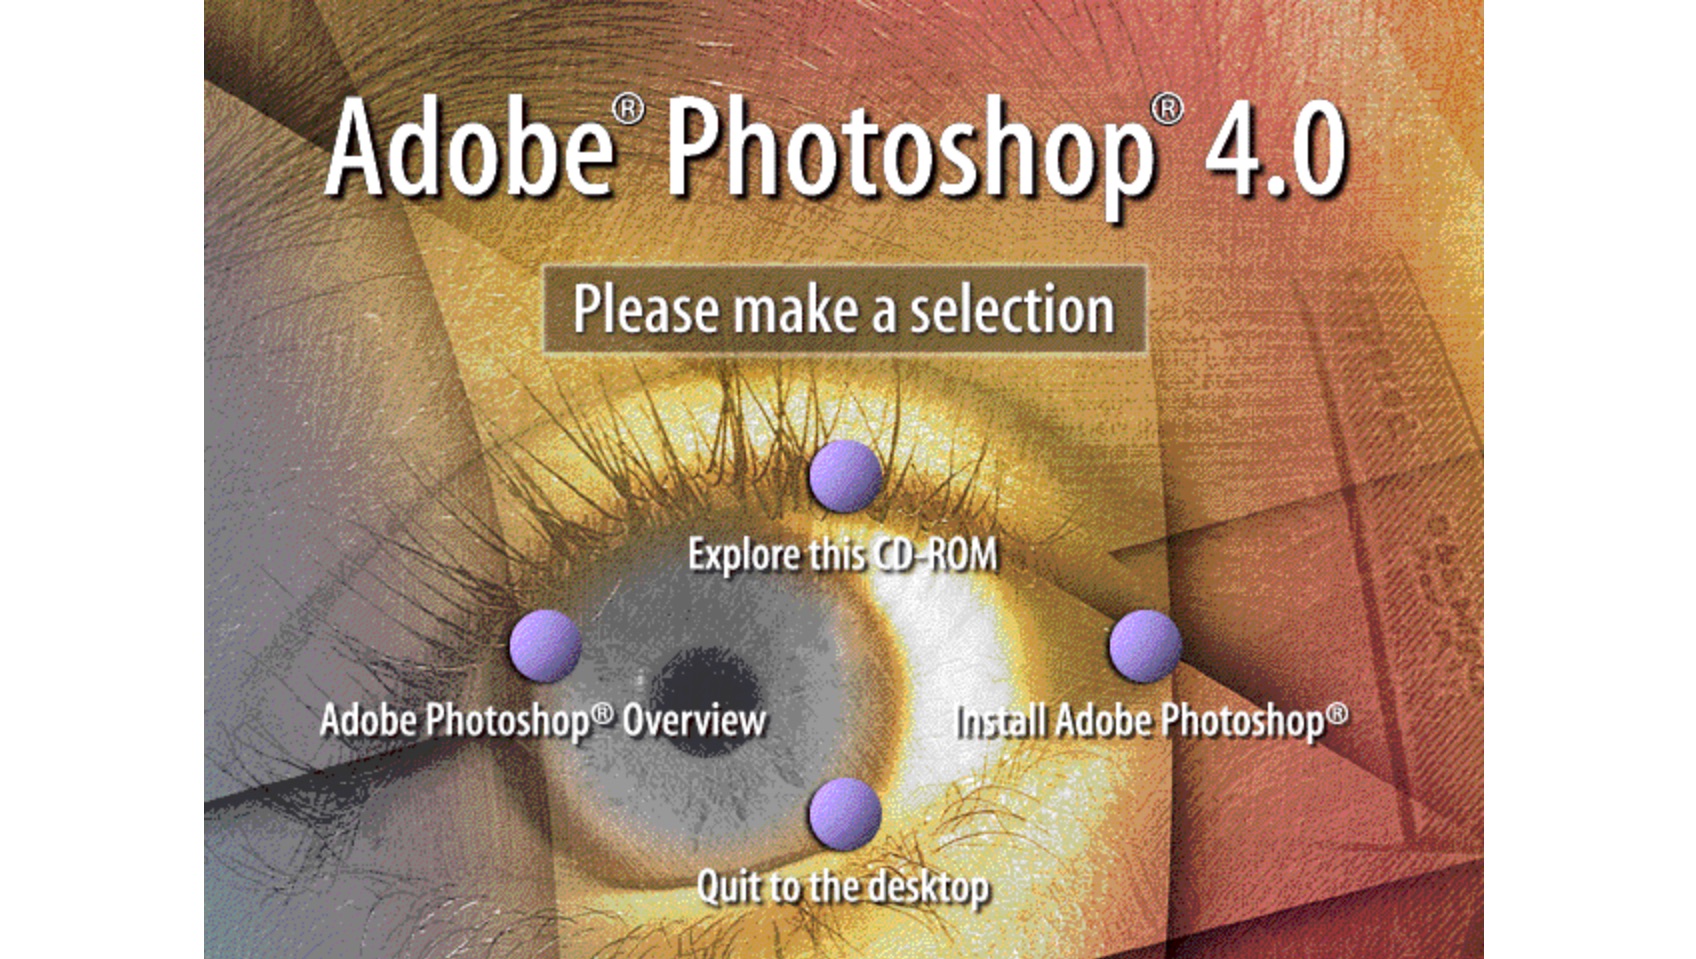 Adobe Photoshop 4.0 for Windows CD-ROM Intro (1996)